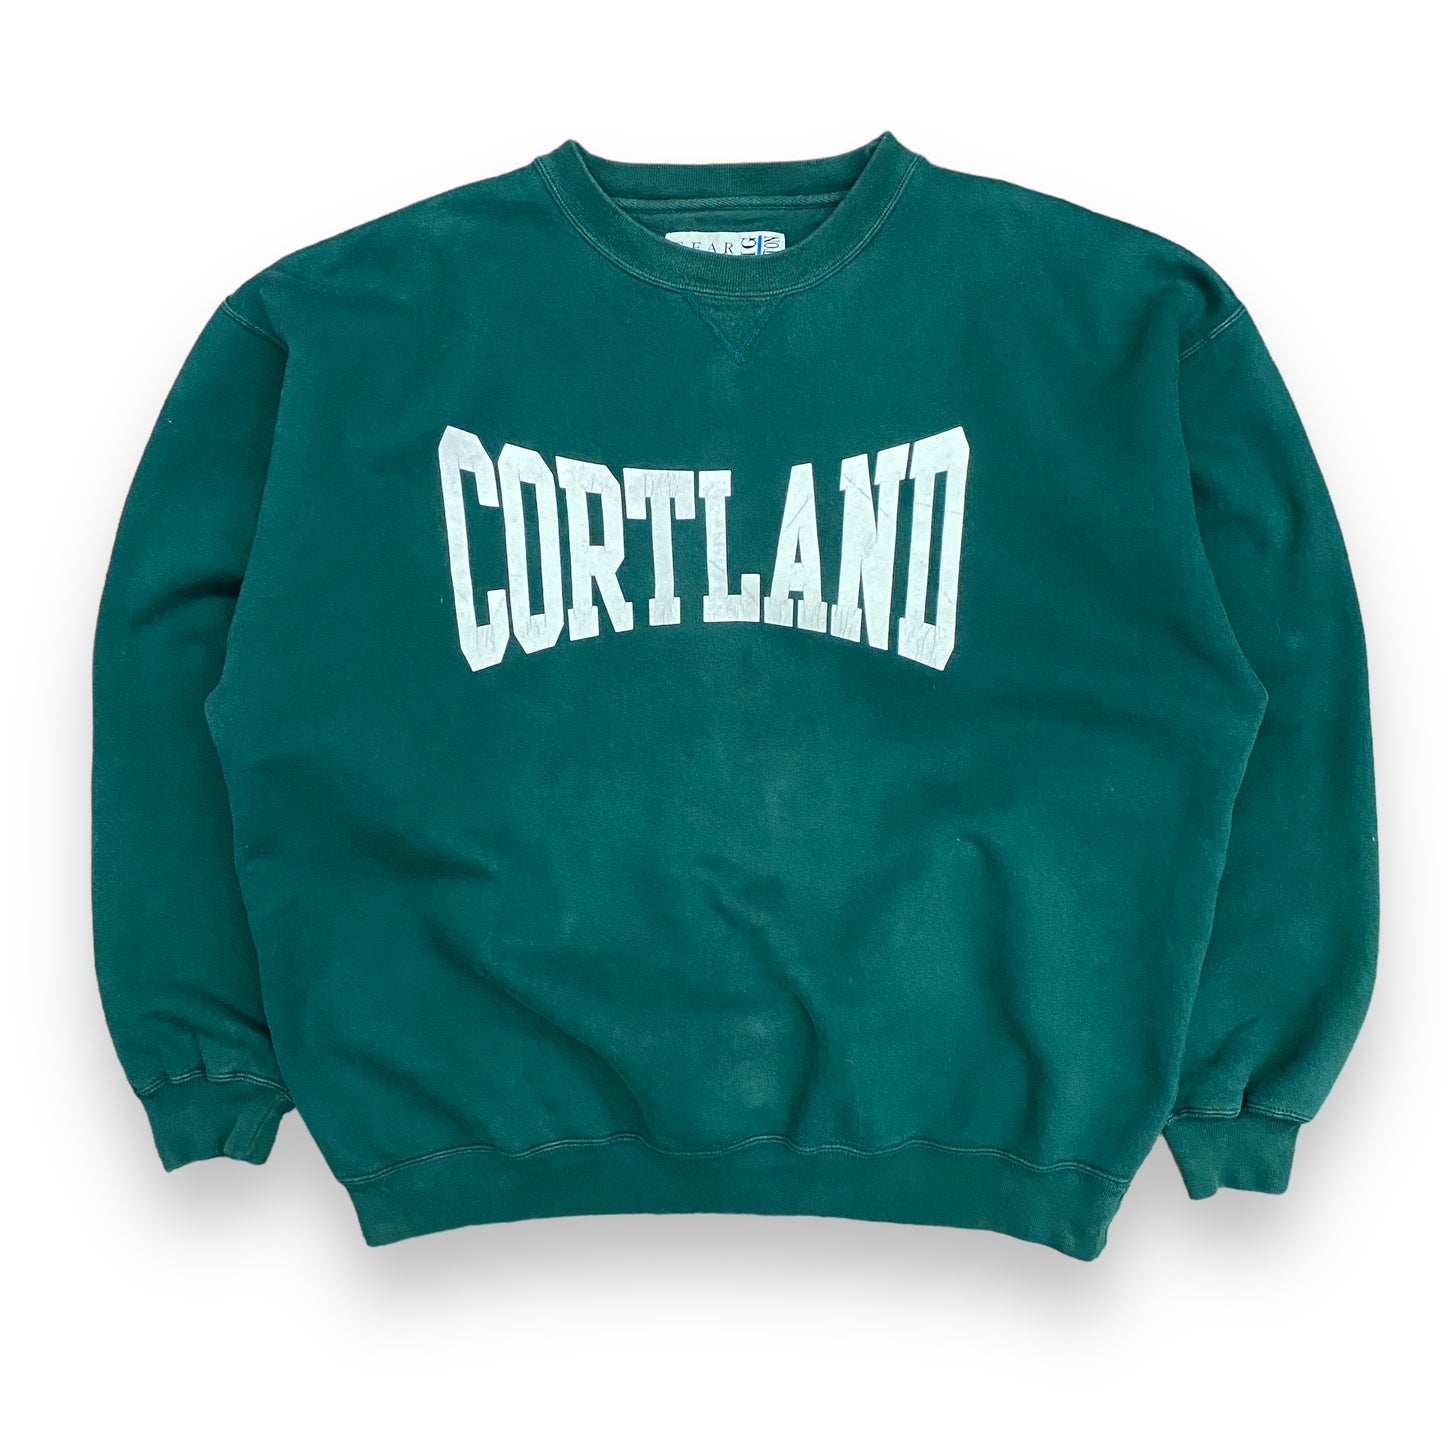 Vintage "Cortland" Forest Green Sweatshirt - Size XL